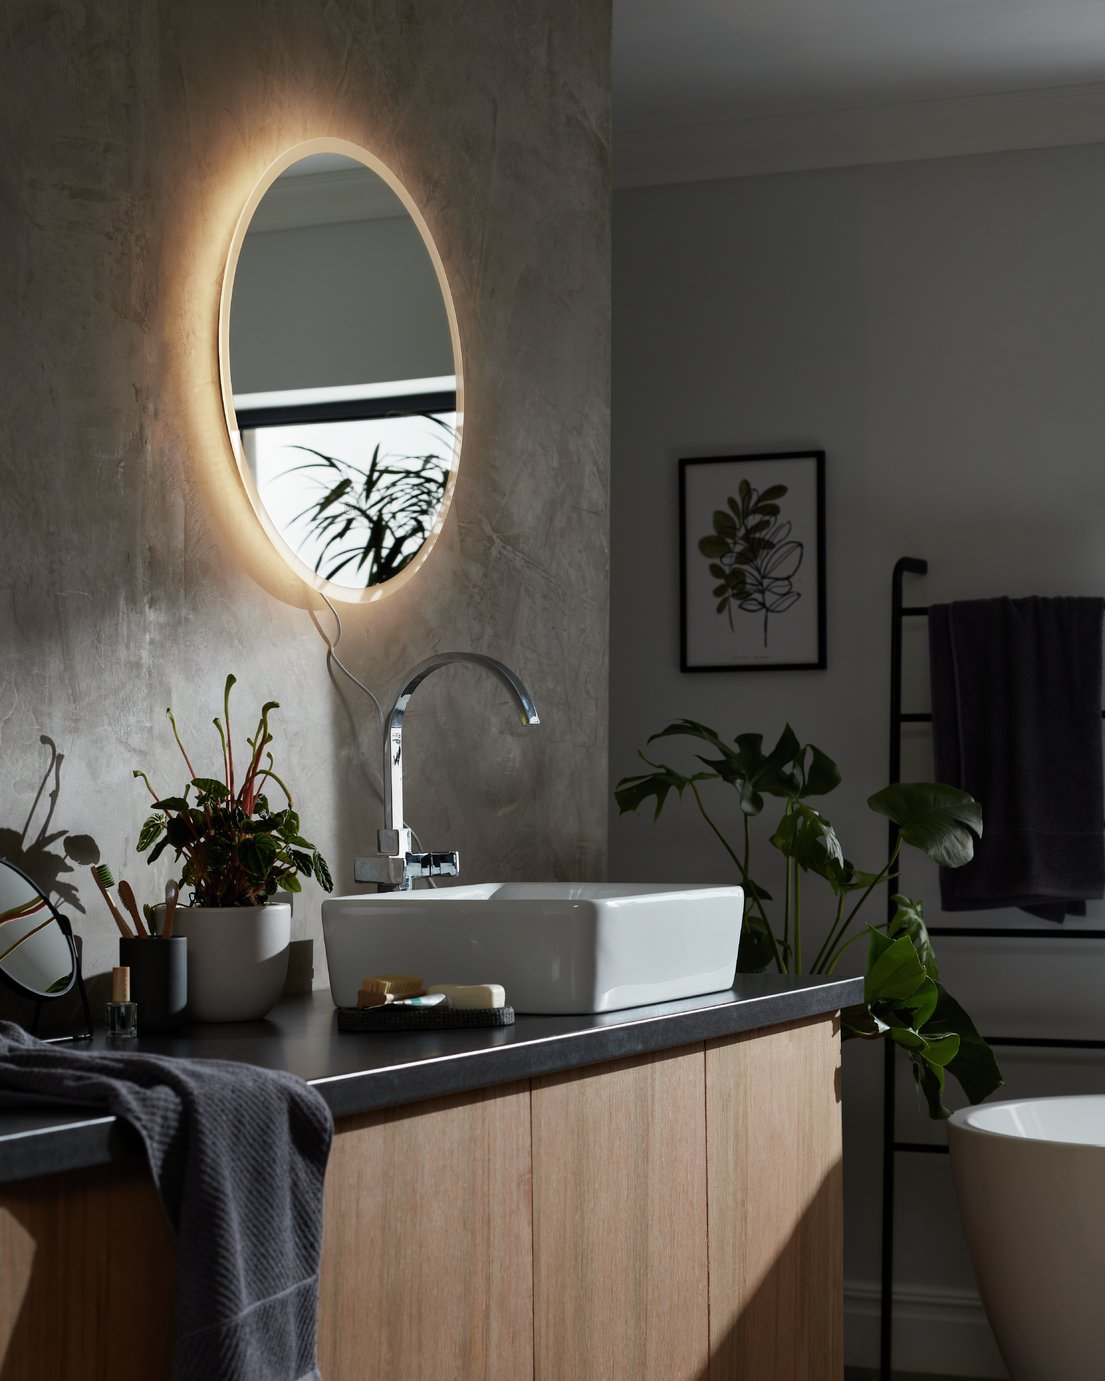 Habitat Bathroom LED Circle Backlit Demister Touch Mirror